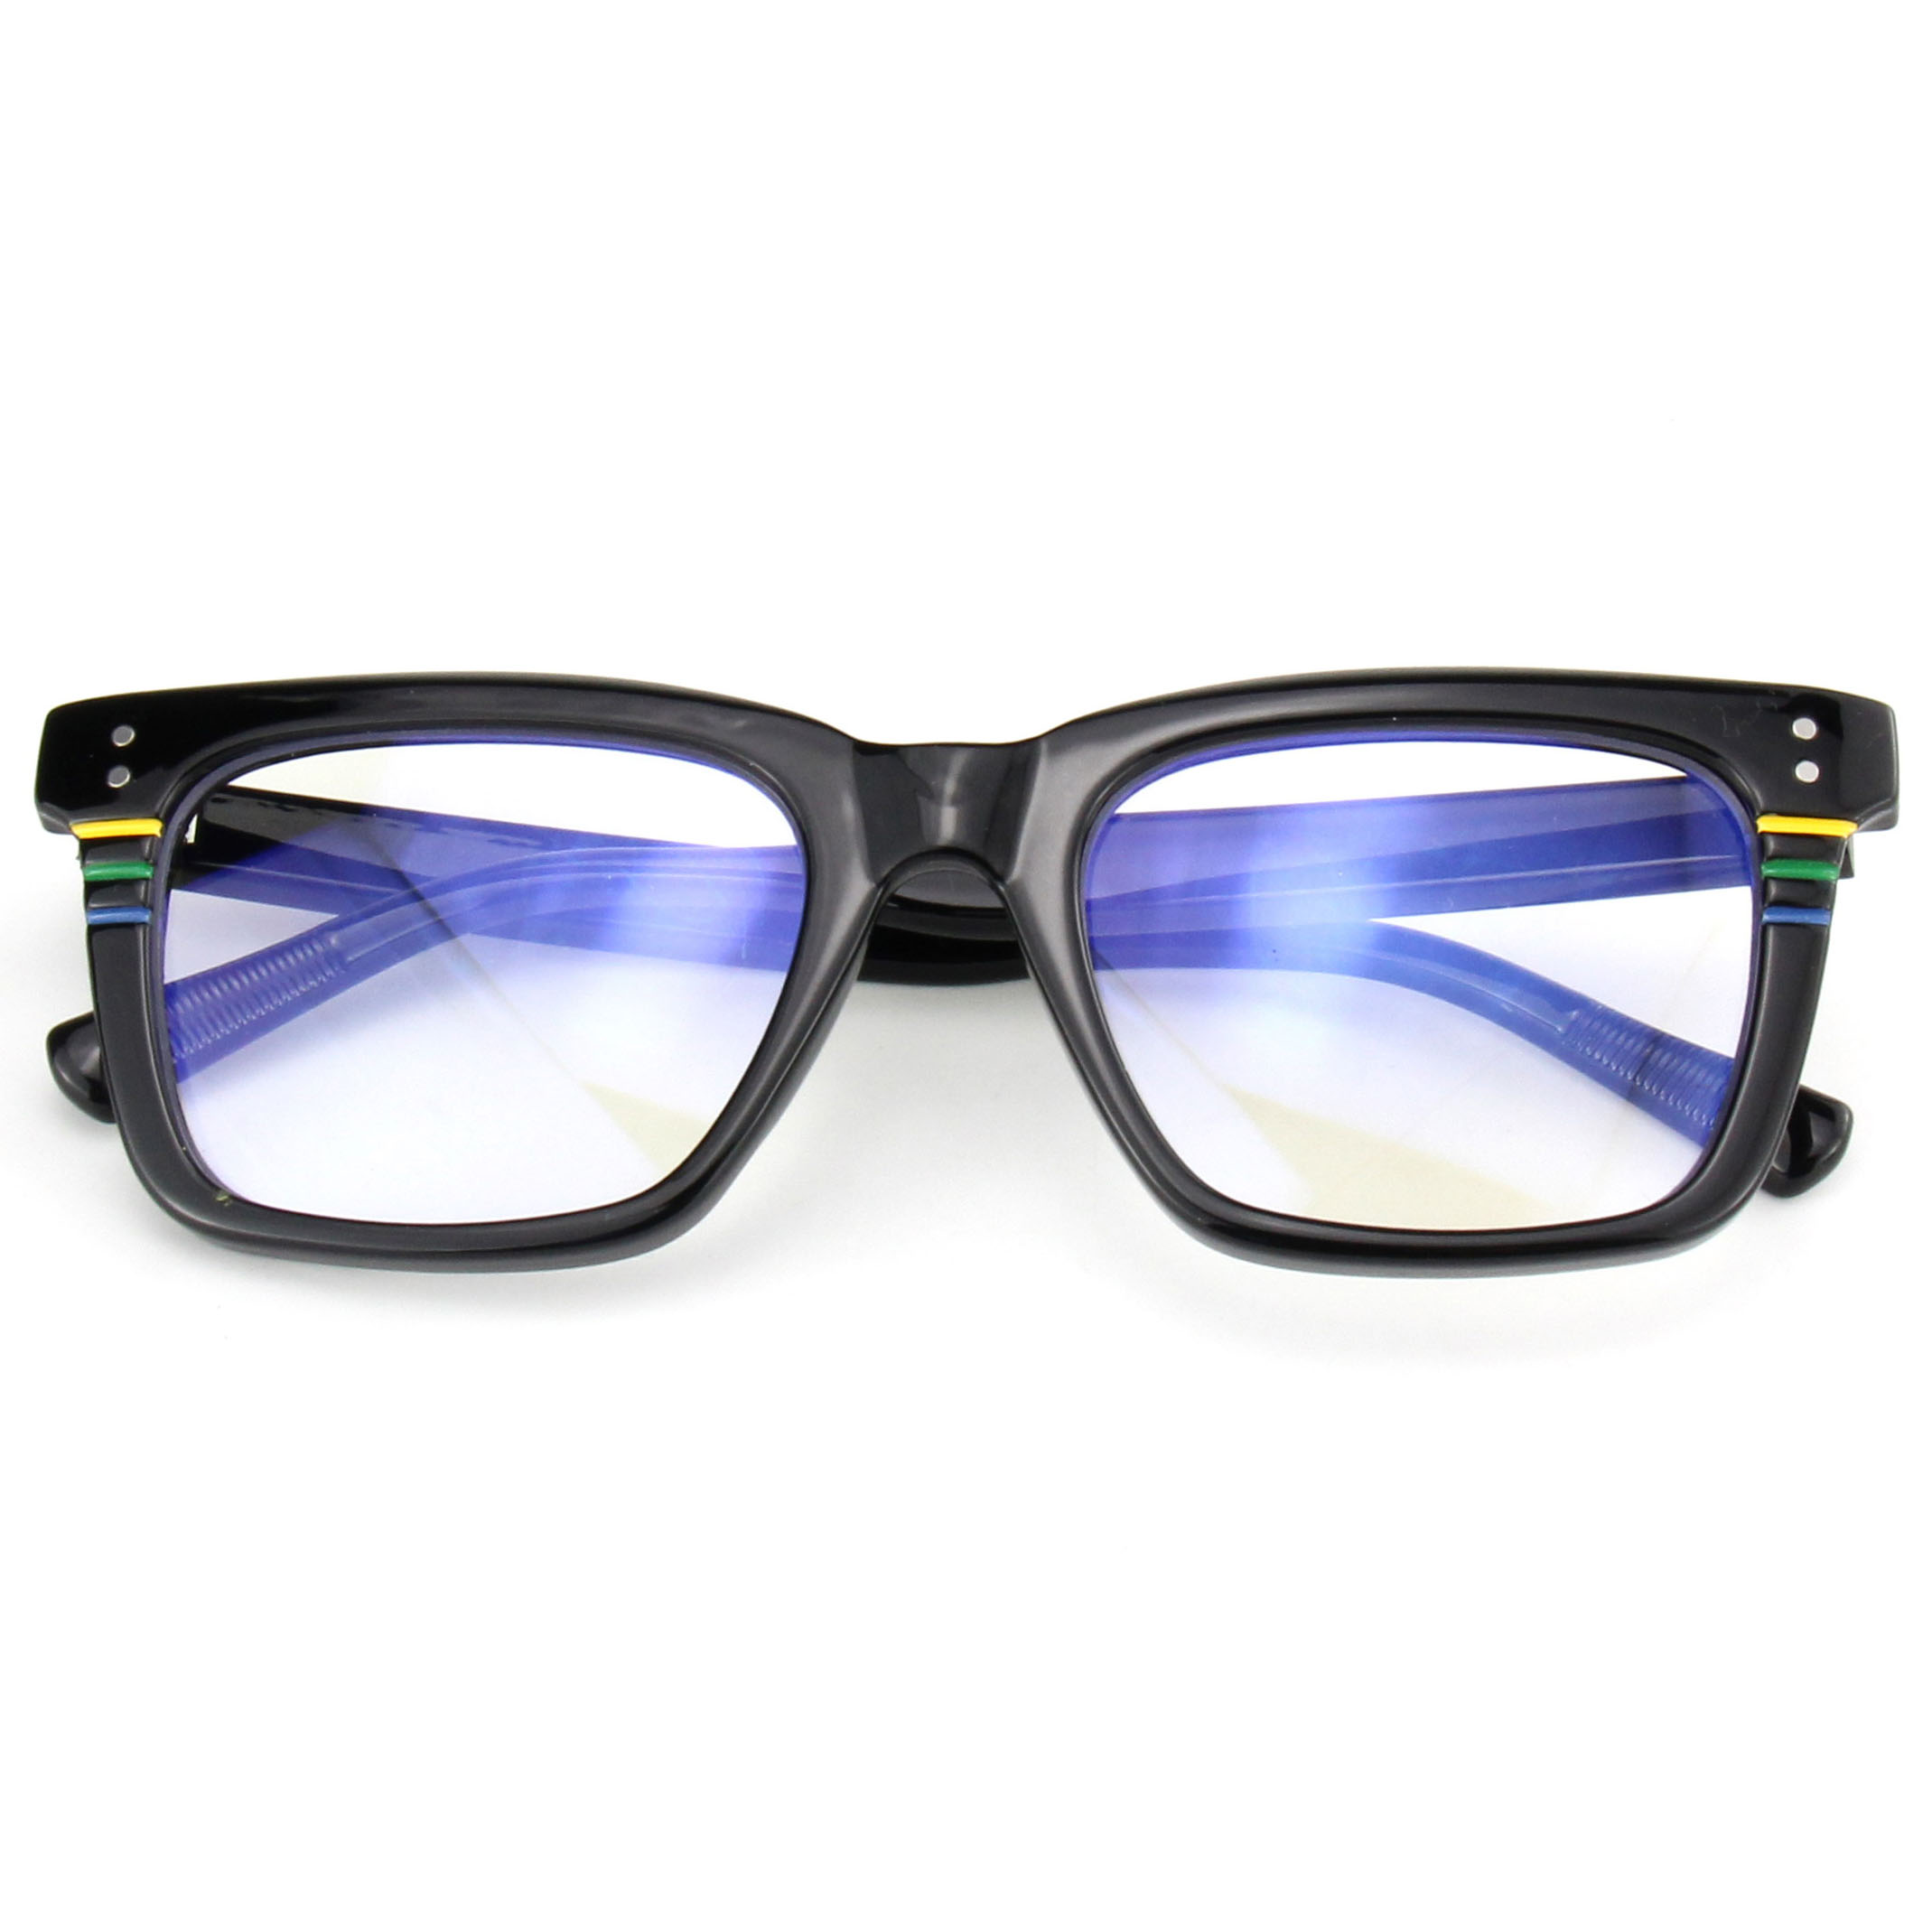 Eugenia optical glasses wholesale modern design  For optical frame glasses-2